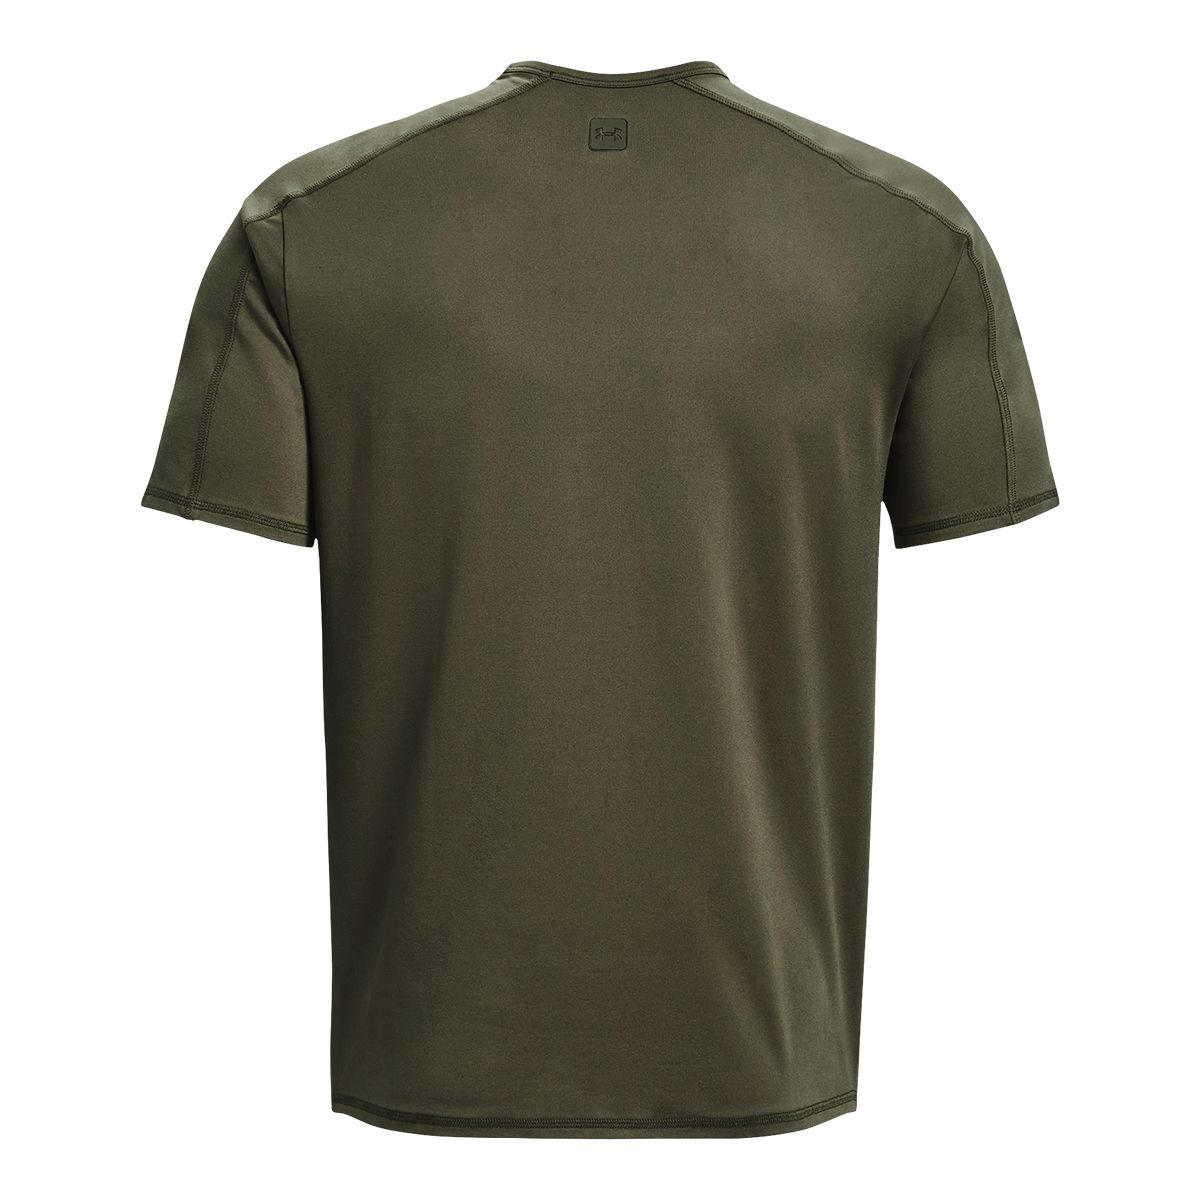 Camiseta Under Armour Athletic Dept Pocket Tee - Masculina